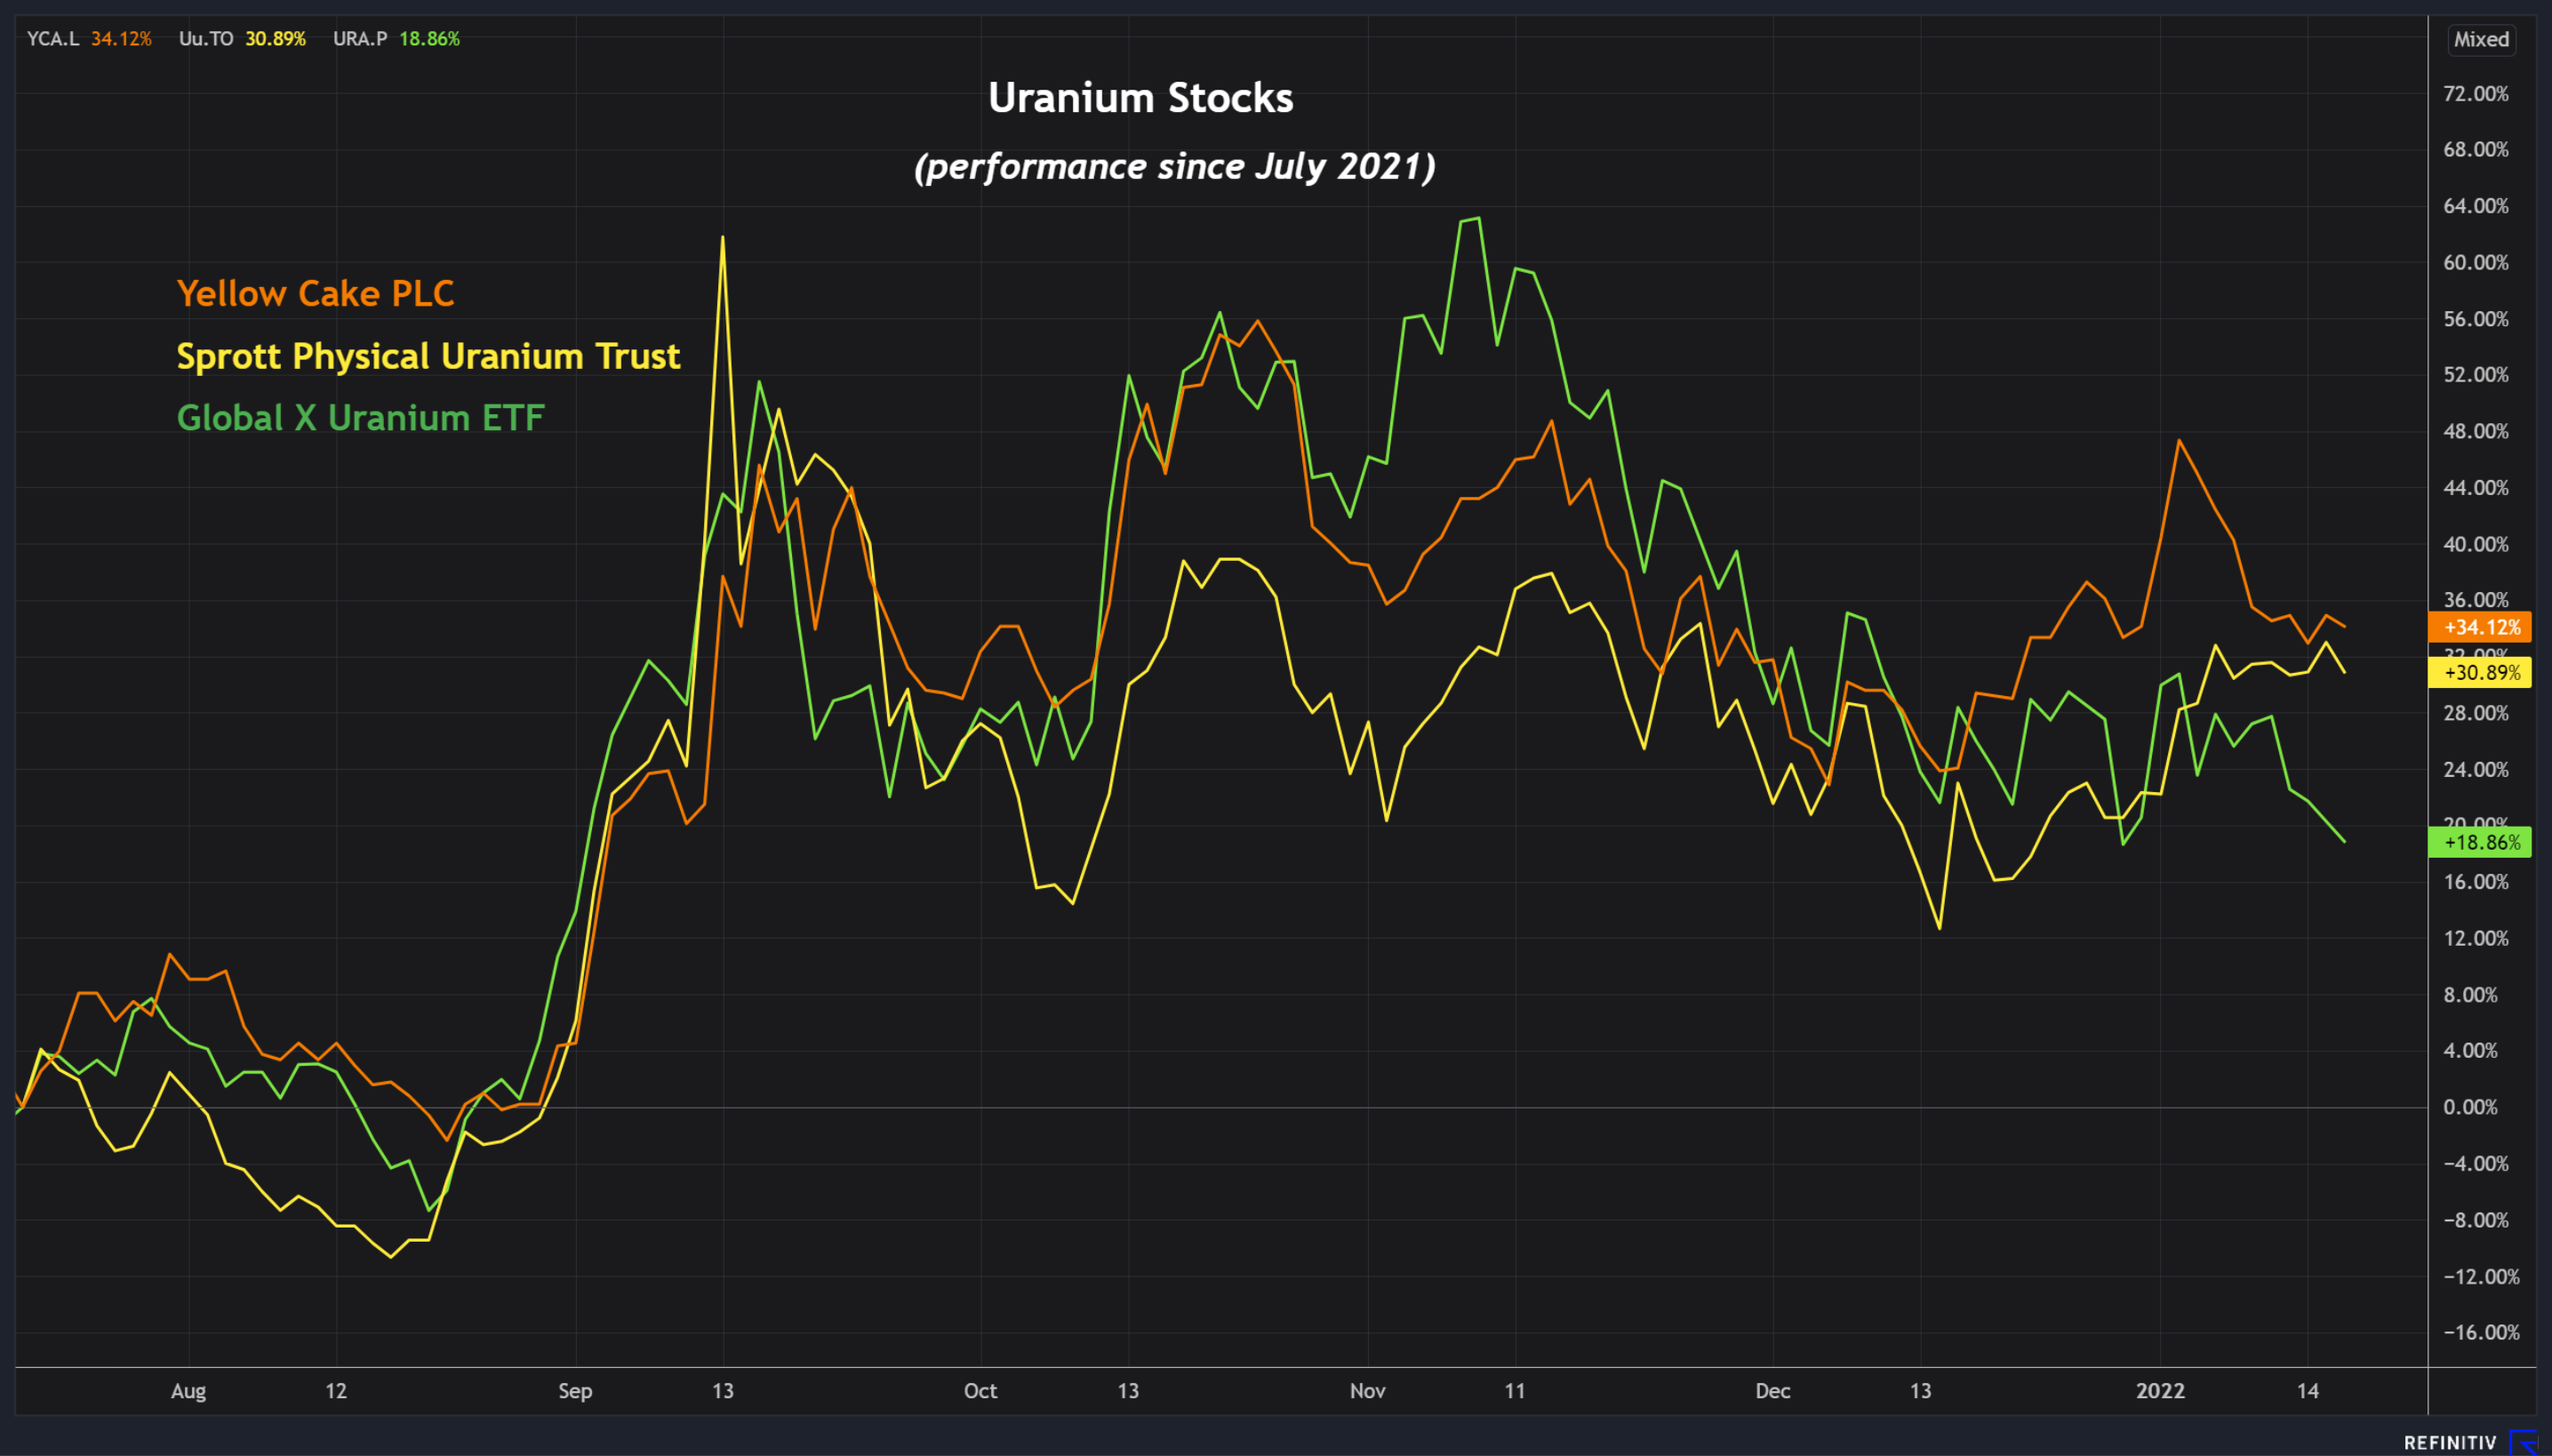 Uranium stocks